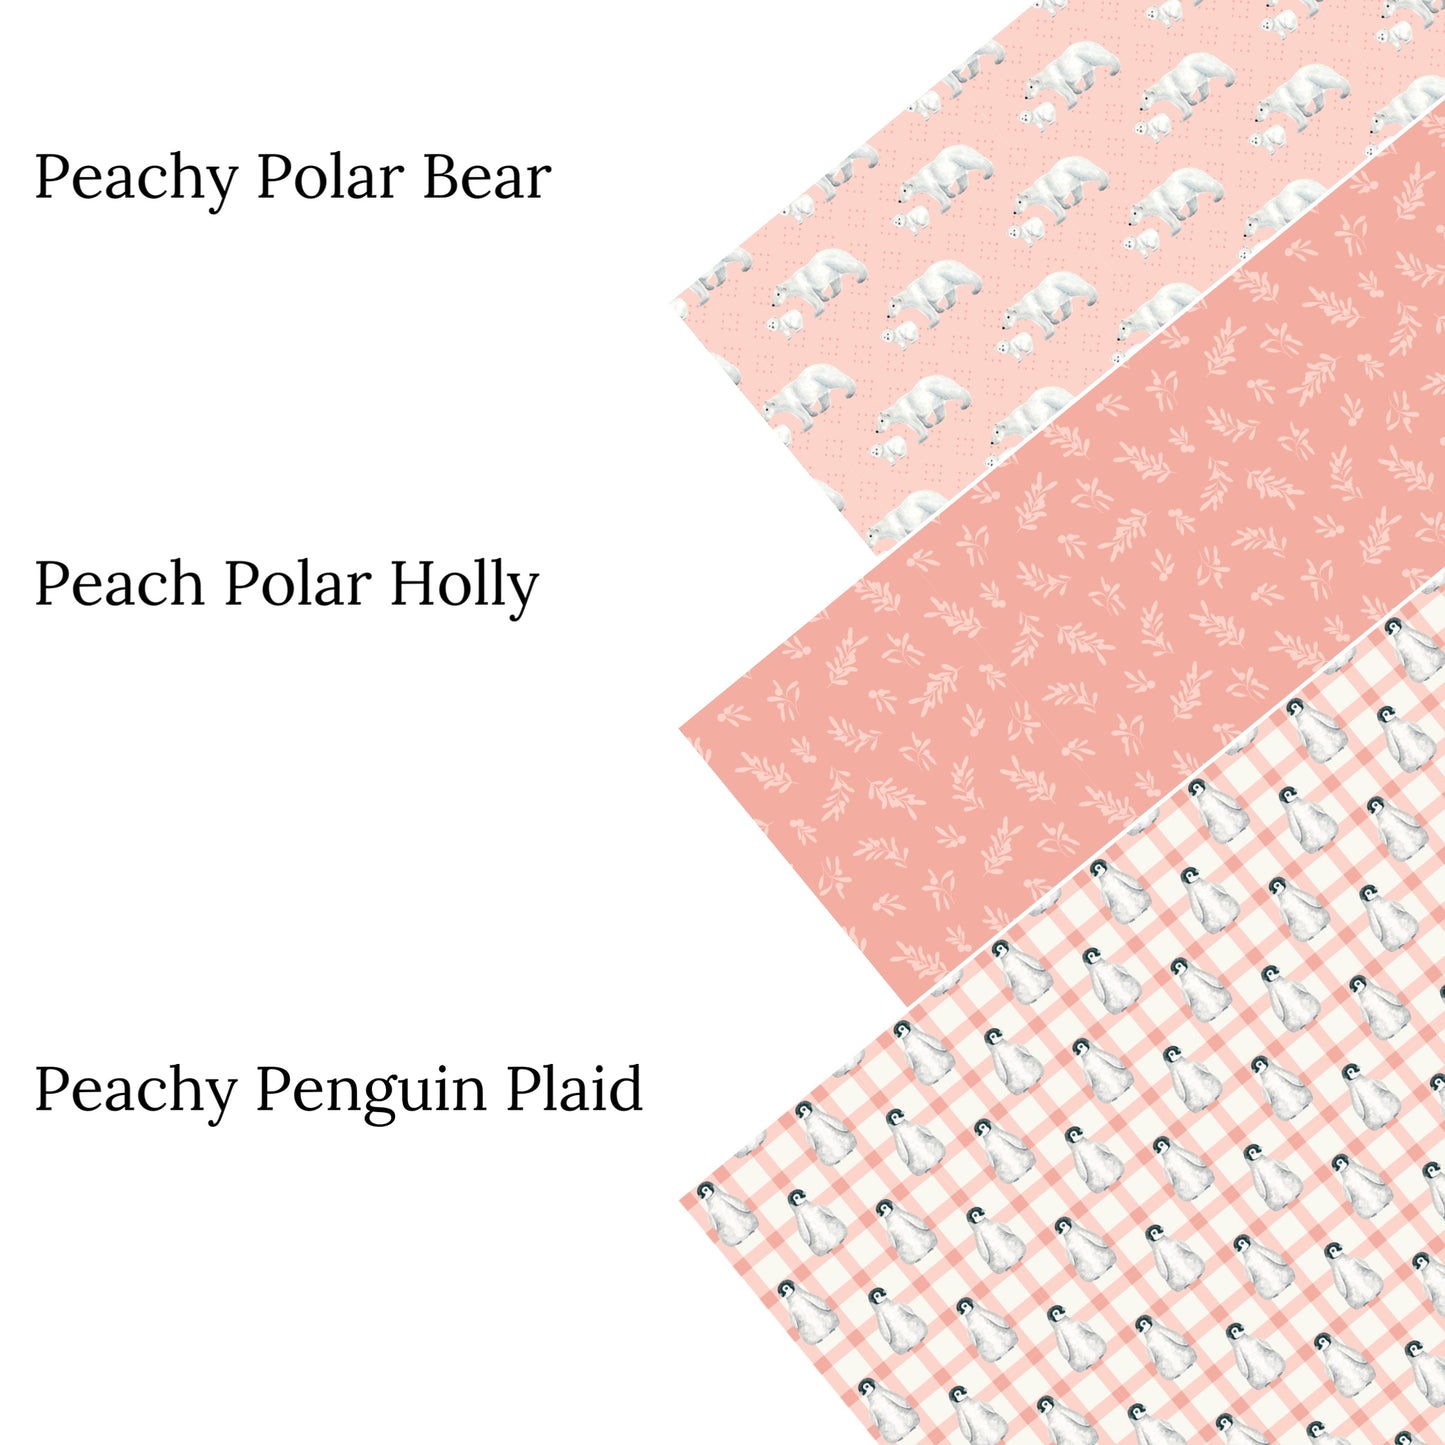 Peachy Polar Bear Faux Leather Sheets